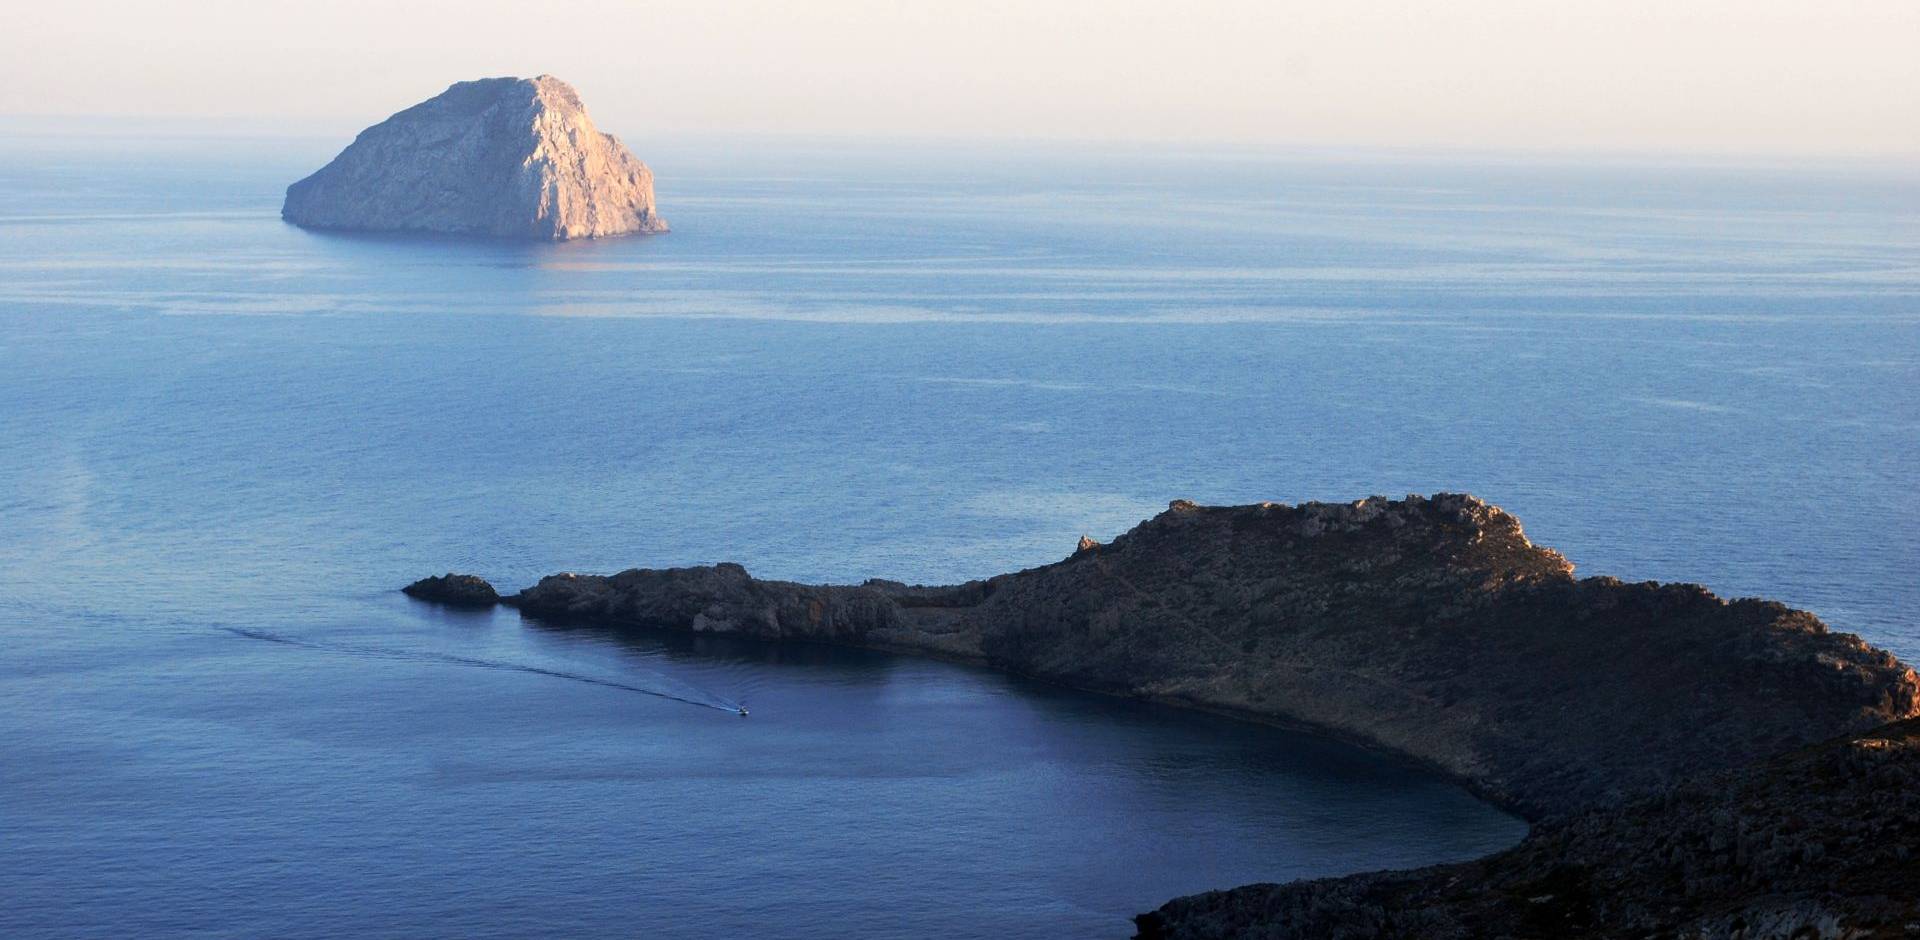 Kythira Island: A Hidden Gem in Greece